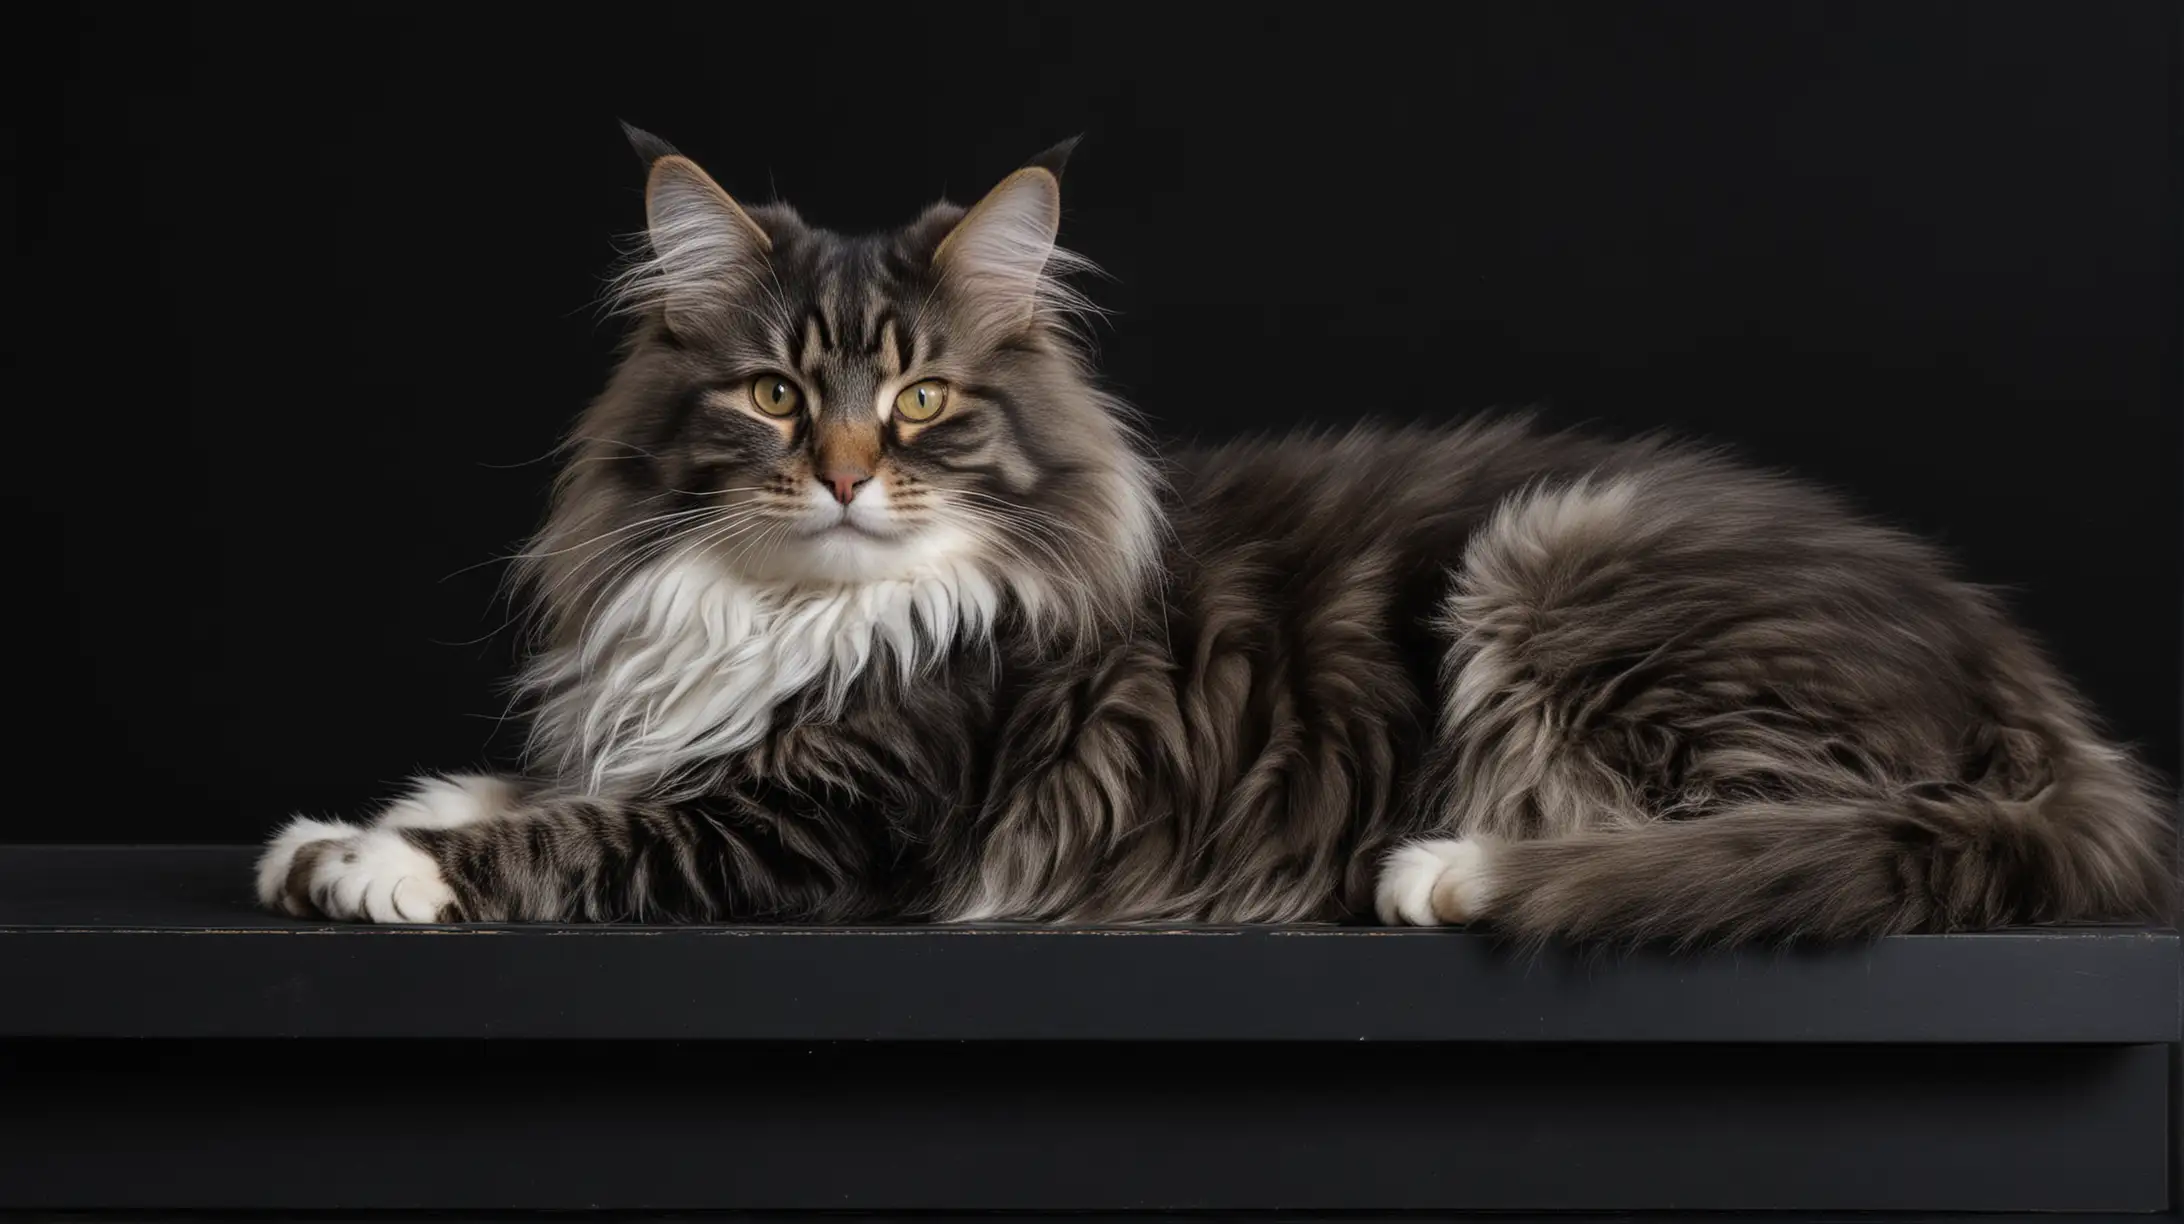 Majestic Norwegian Forest Cat on Black Shelf